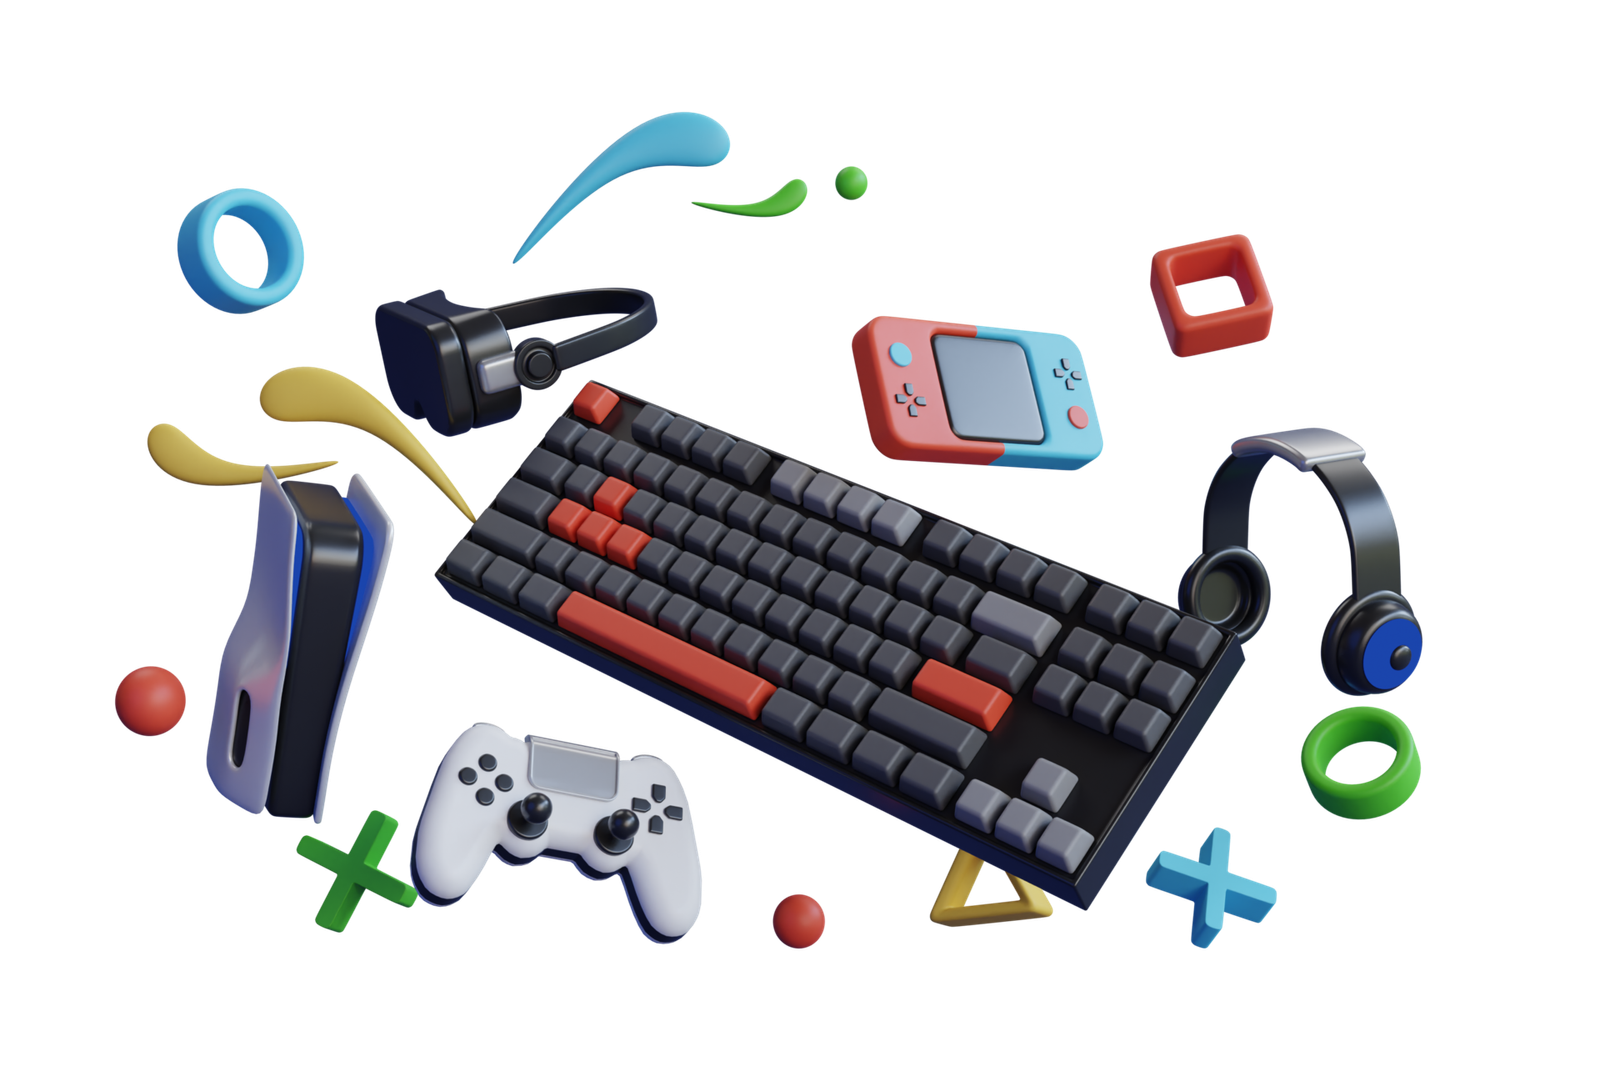 gaming-keyboard-3d-model-rendering-flying-gamer-gears-like-mouse-keyboard-joystick-headset-vr-headset-gamepad-gaming-keyboard-hanging-with-gaming-equipment-3d-rendering-png.png